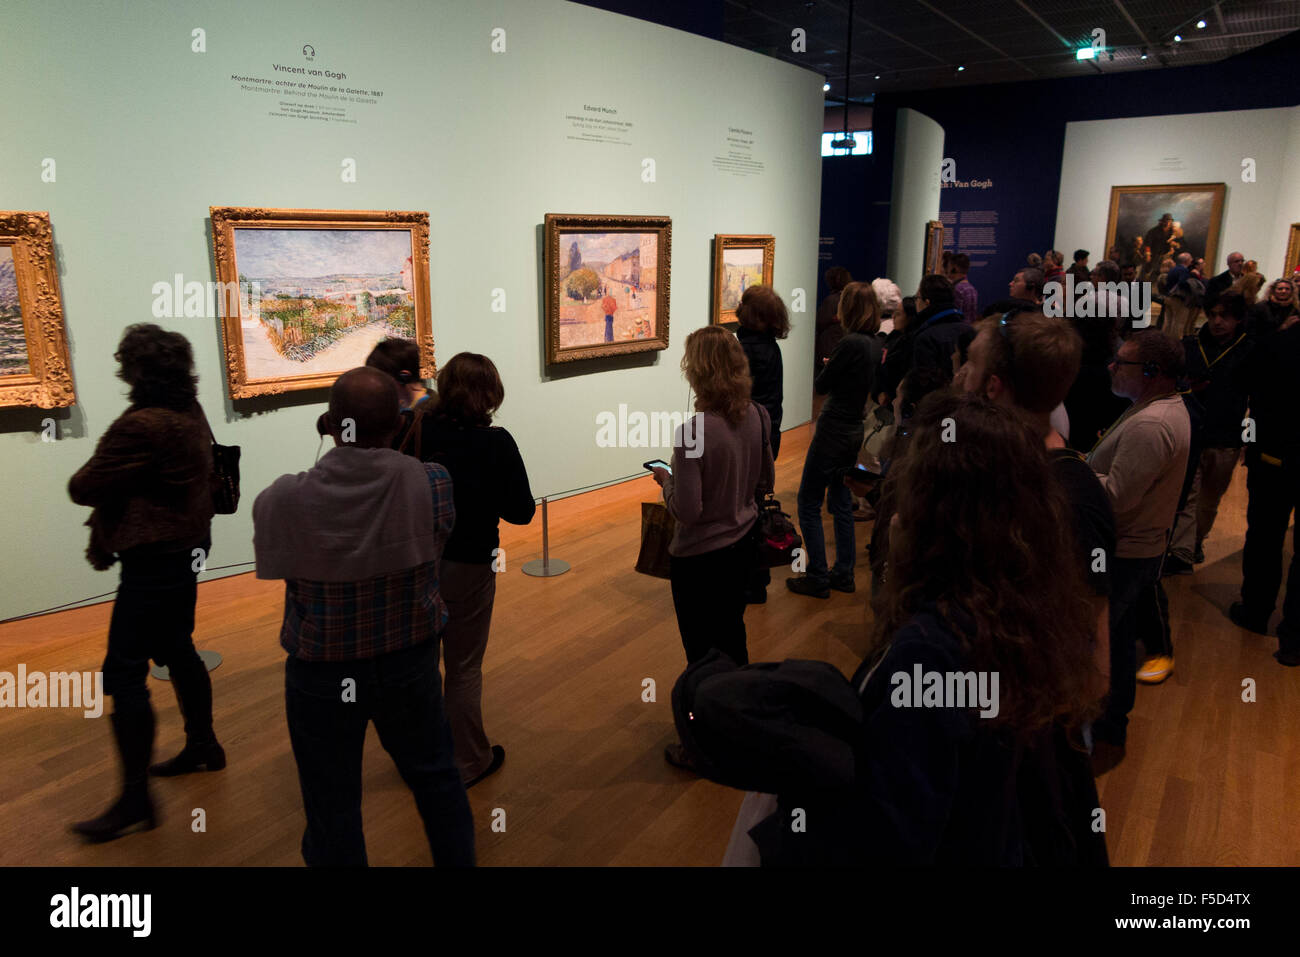 Mostra 'Munch: Van Gogh' che ha attirato parallelismi tra Vincent van Gogh & Edvard Munch, al Van Gogh museum di Amsterdam nel 2015 Foto Stock